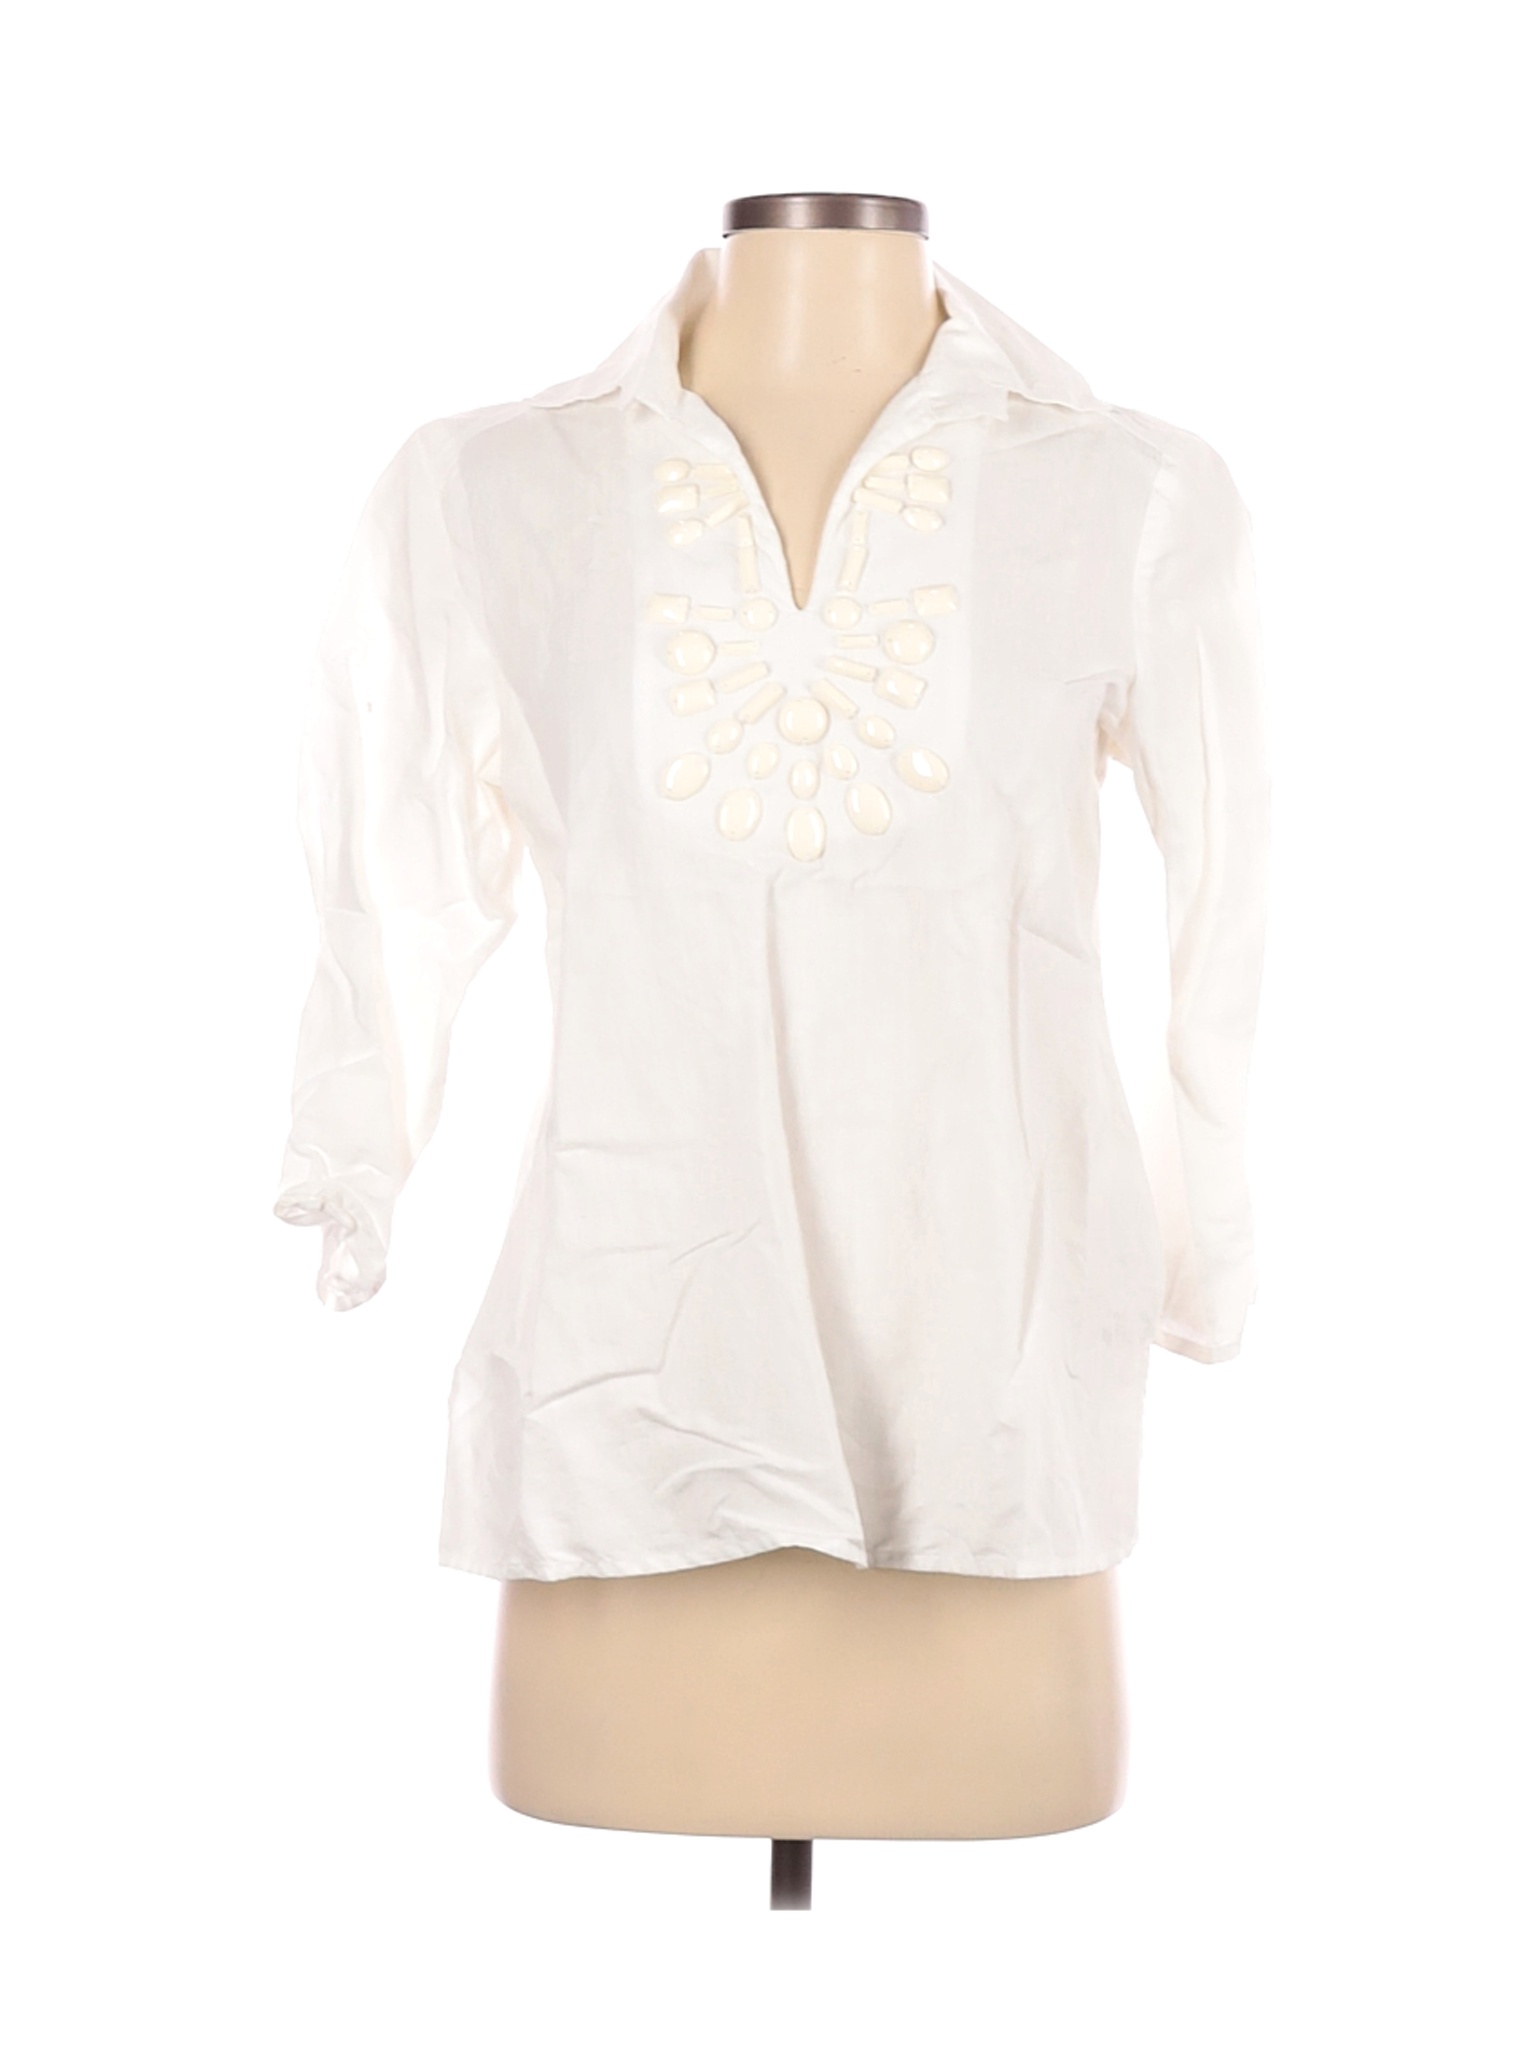 Talbots Women White 3/4 Sleeve Blouse S | eBay